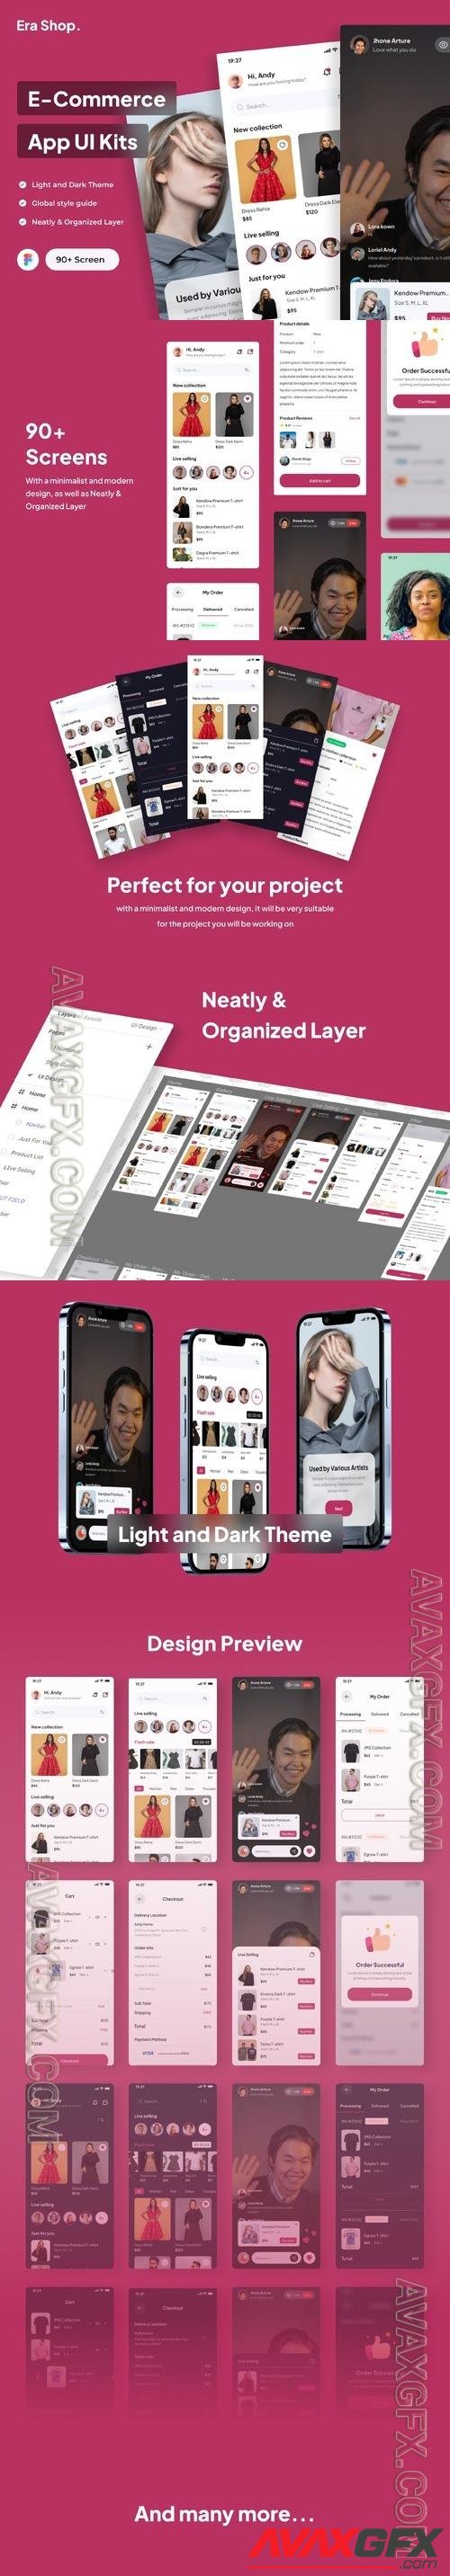 Era Shop - E Commerce App UI Kits 